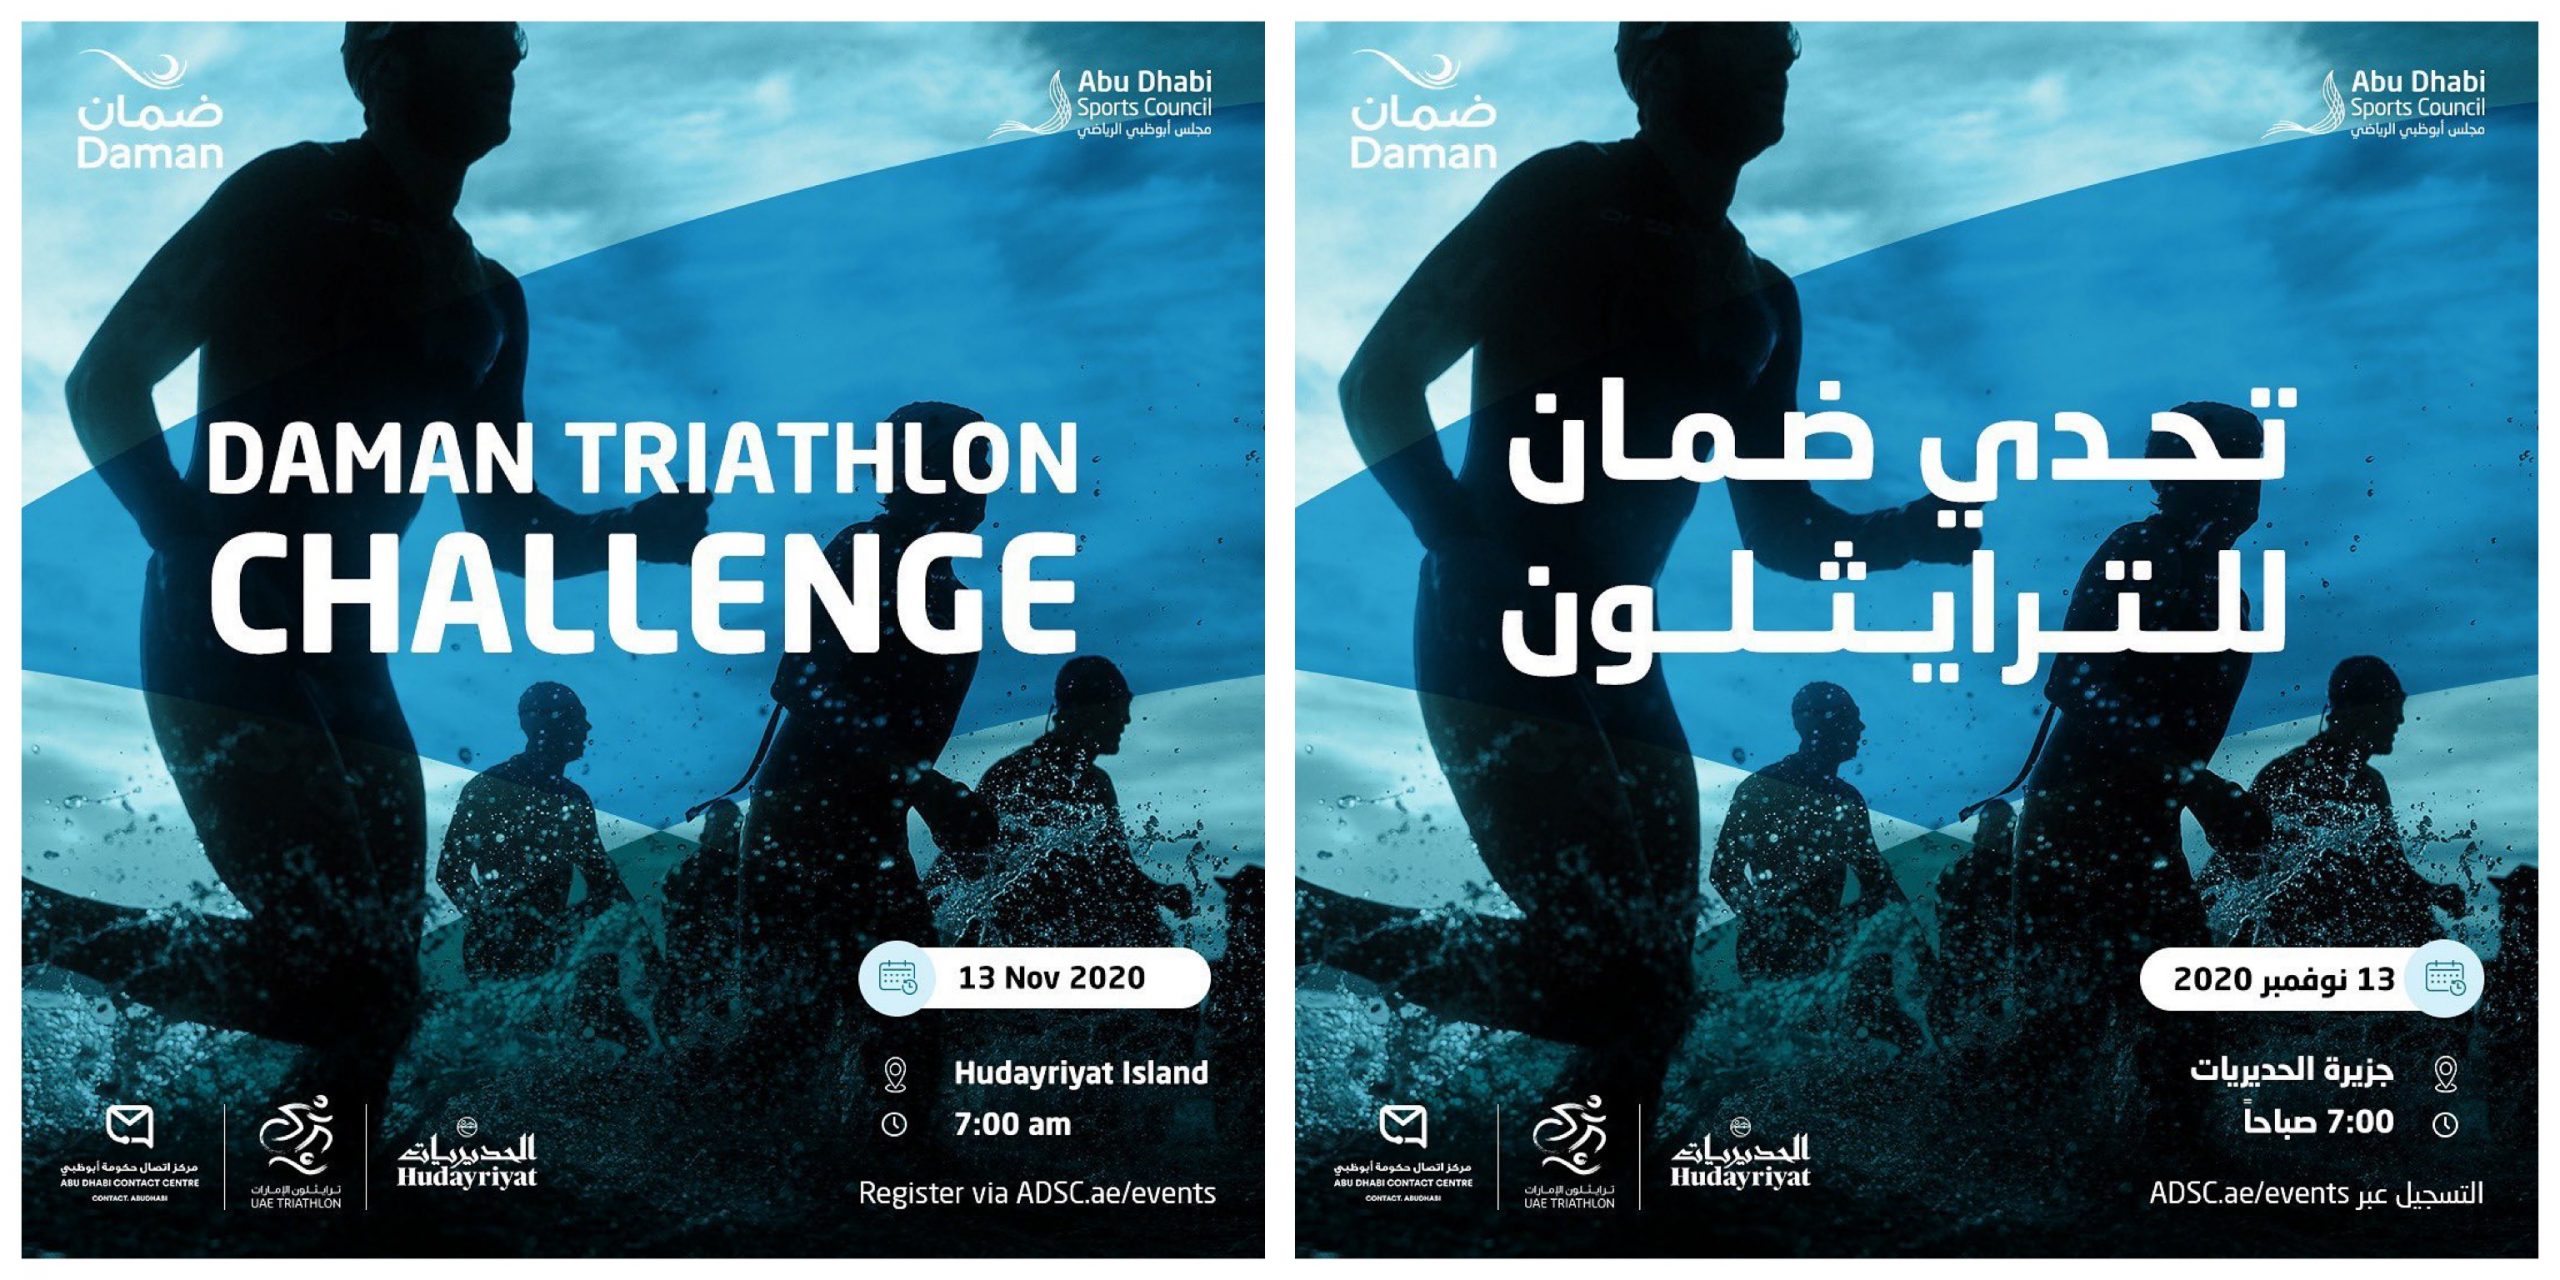 Daman Triathlon Challenge 2020 - Coming Soon in UAE